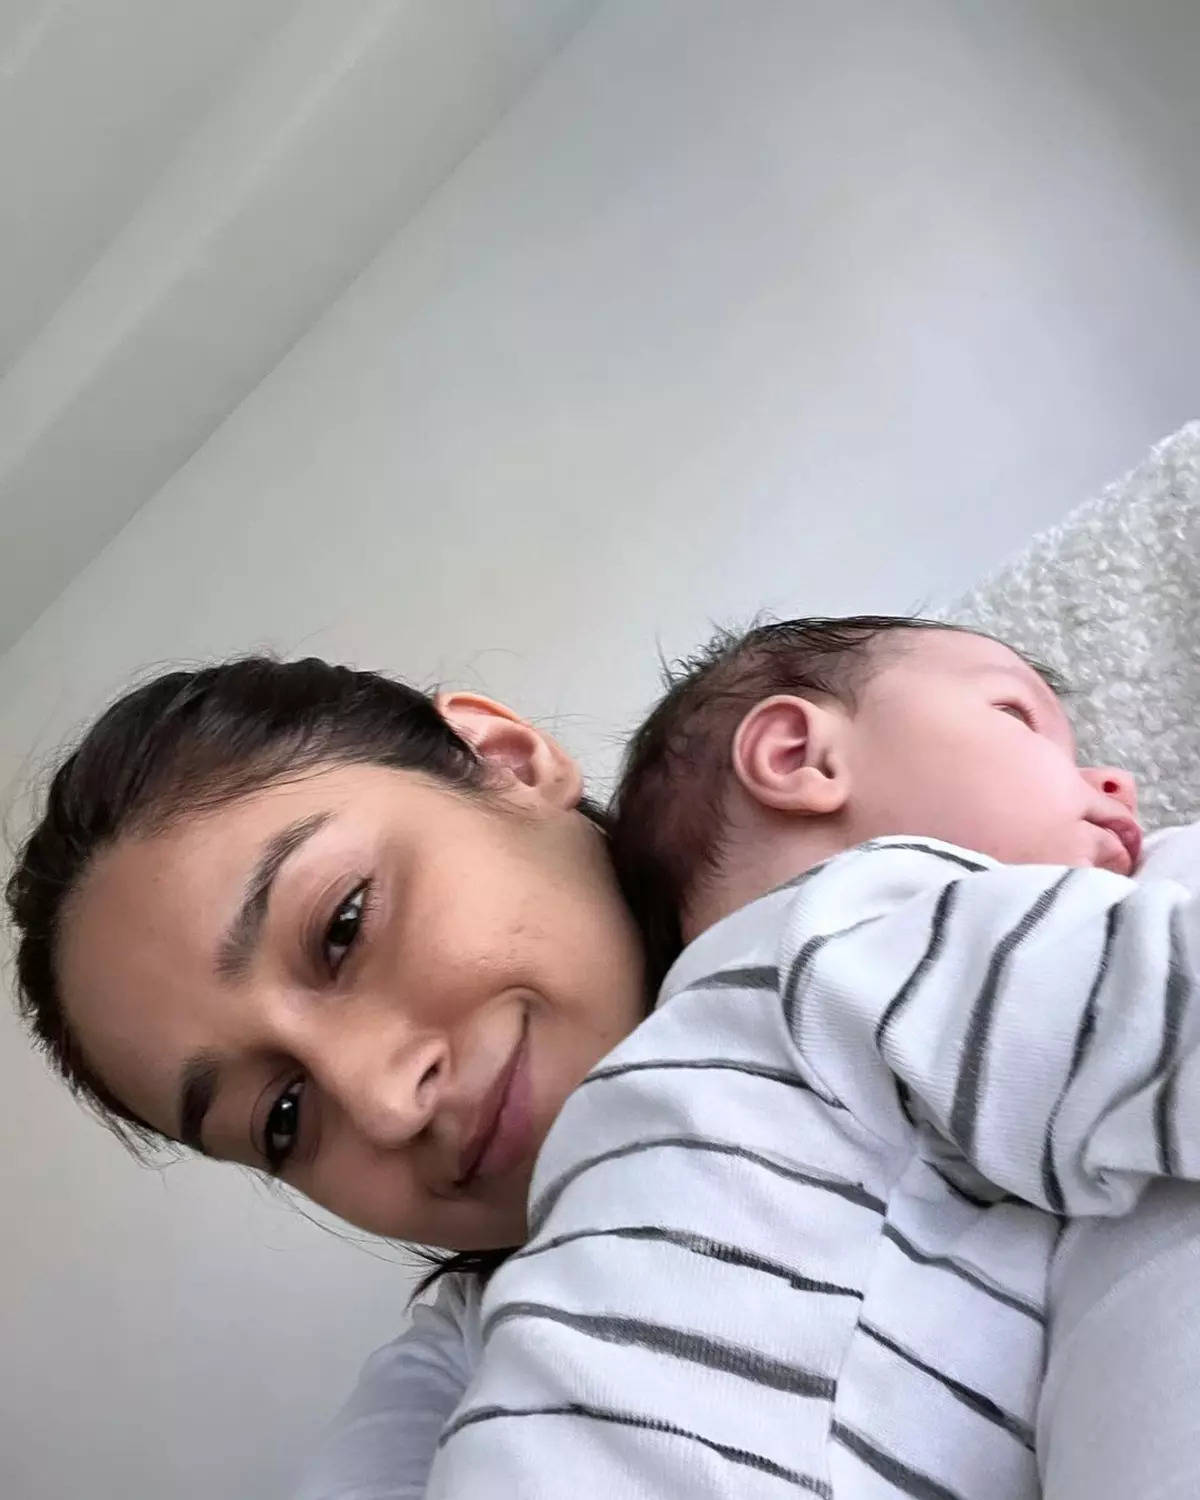 Ileana D'Cruz shares adorable photo of her baby boy, expresses immense gratitude